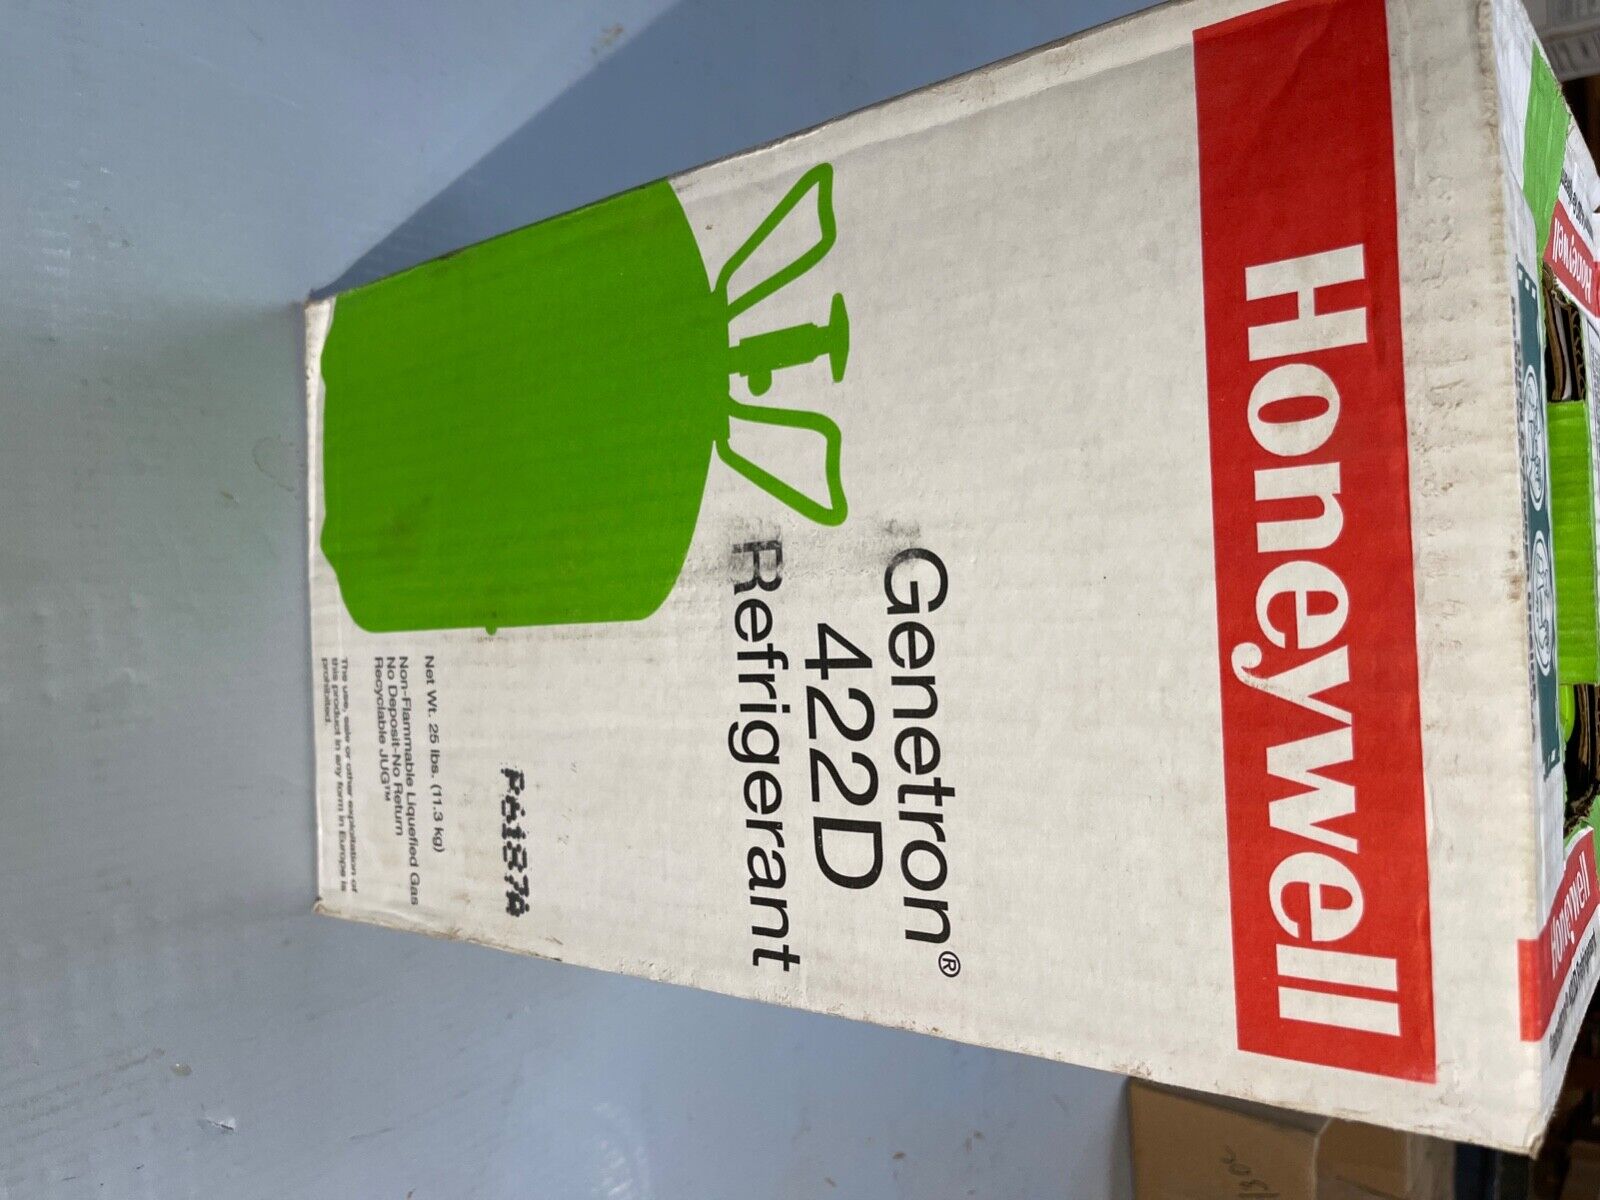 Business-industrial Hvac Equipment  honeywell Genetron R-422d Refrigerant New.